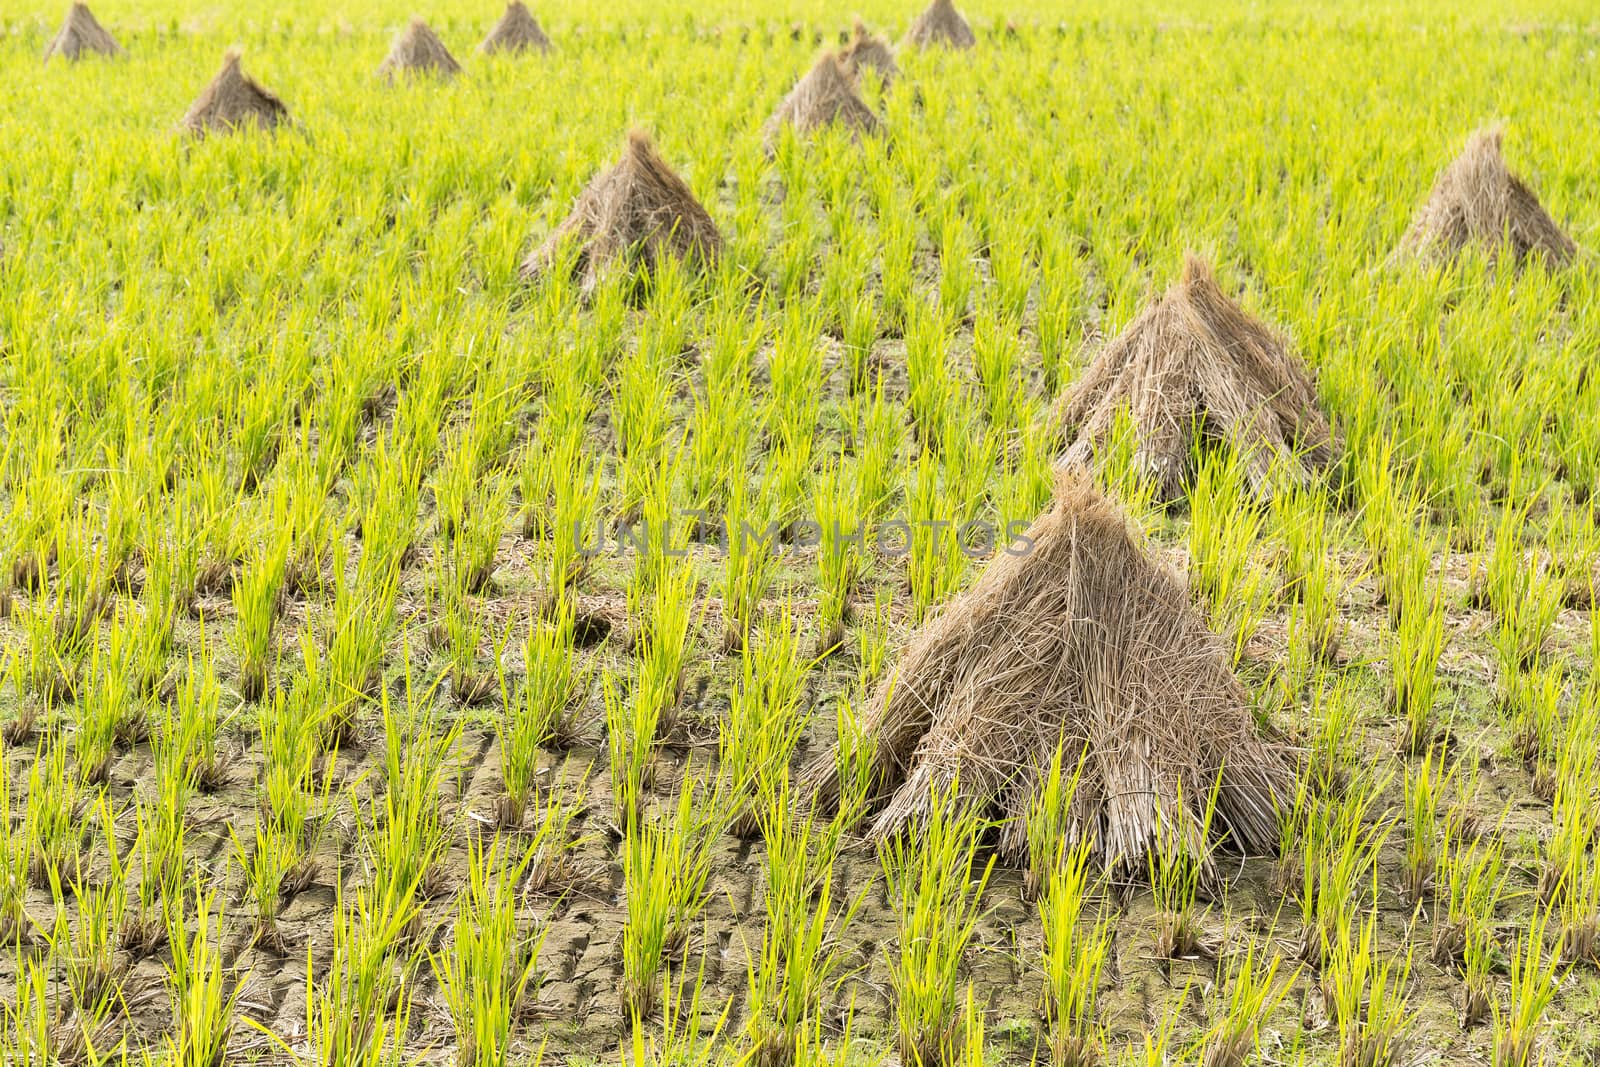 Paddy rice field